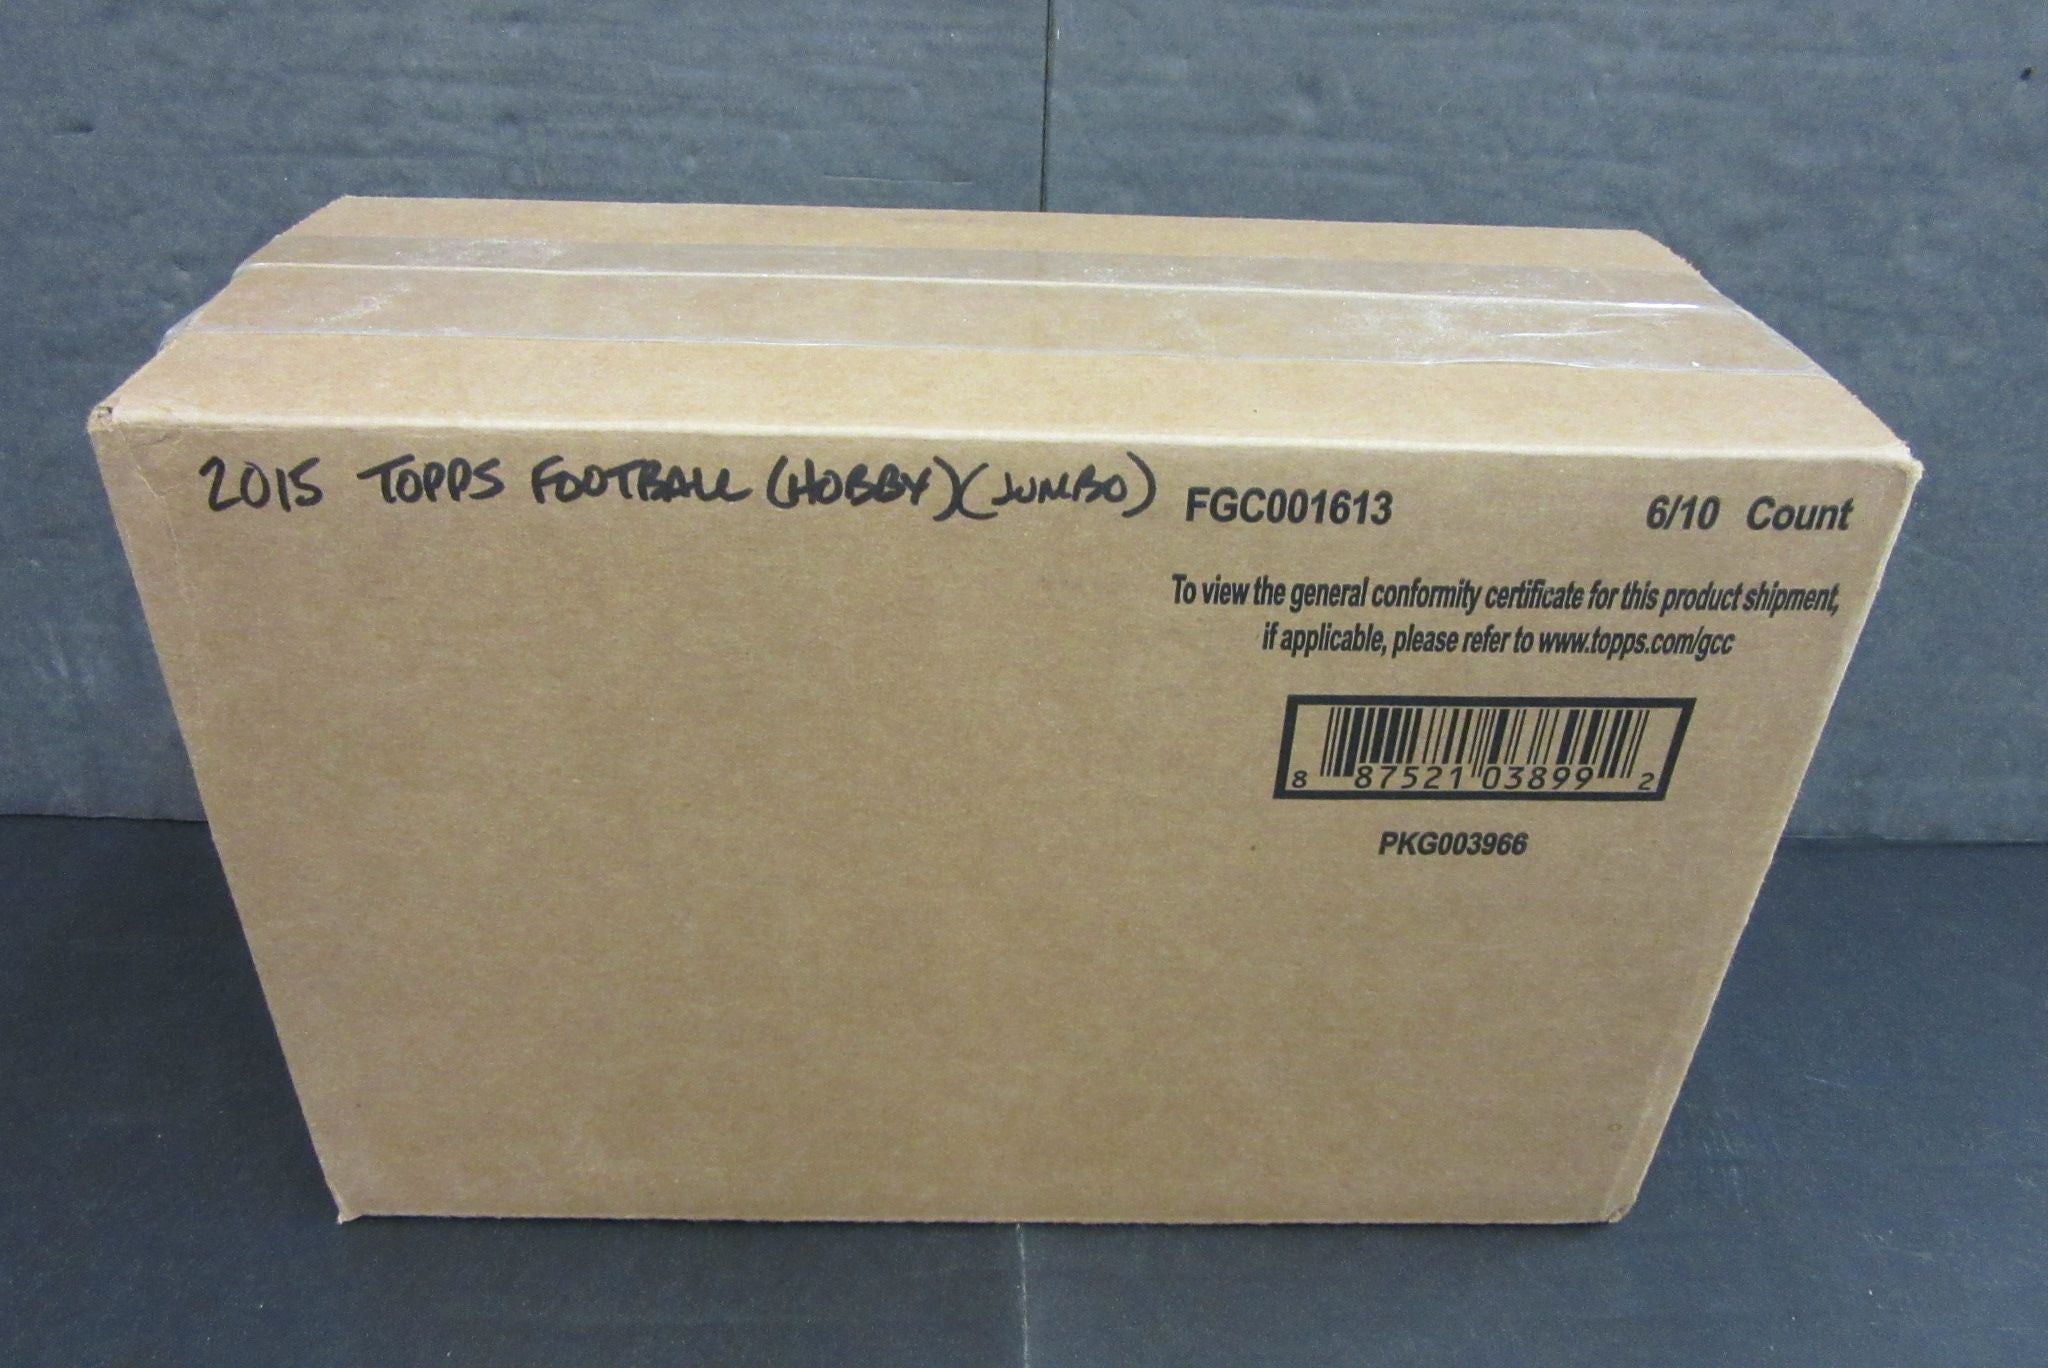 2015 Topps Football Jumbo Case (Hobby) (6 Box)